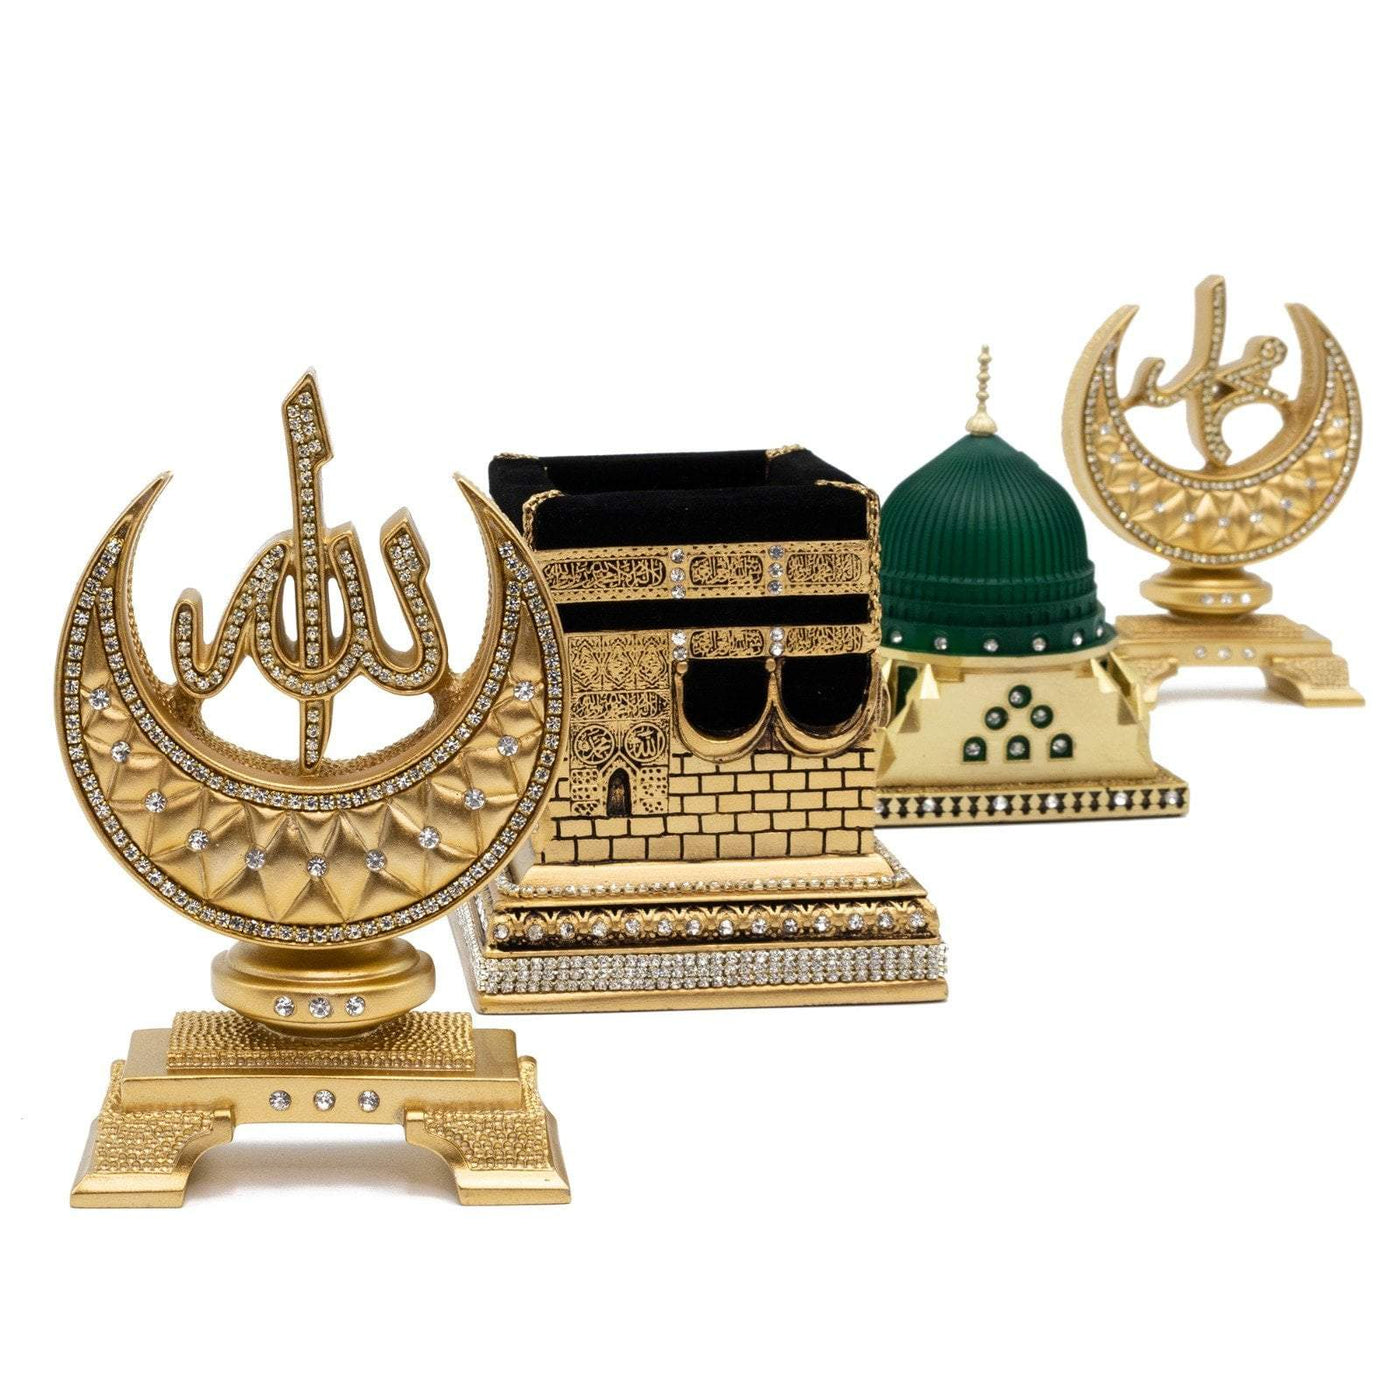 Modefa Islamic Decor Gold - Kaba/Green Dome/Allah/Muhammad Islamic Table Decor 4 Piece Set - Allah/Muhammad/Kaba Replica/Green Dome Replica - Gold